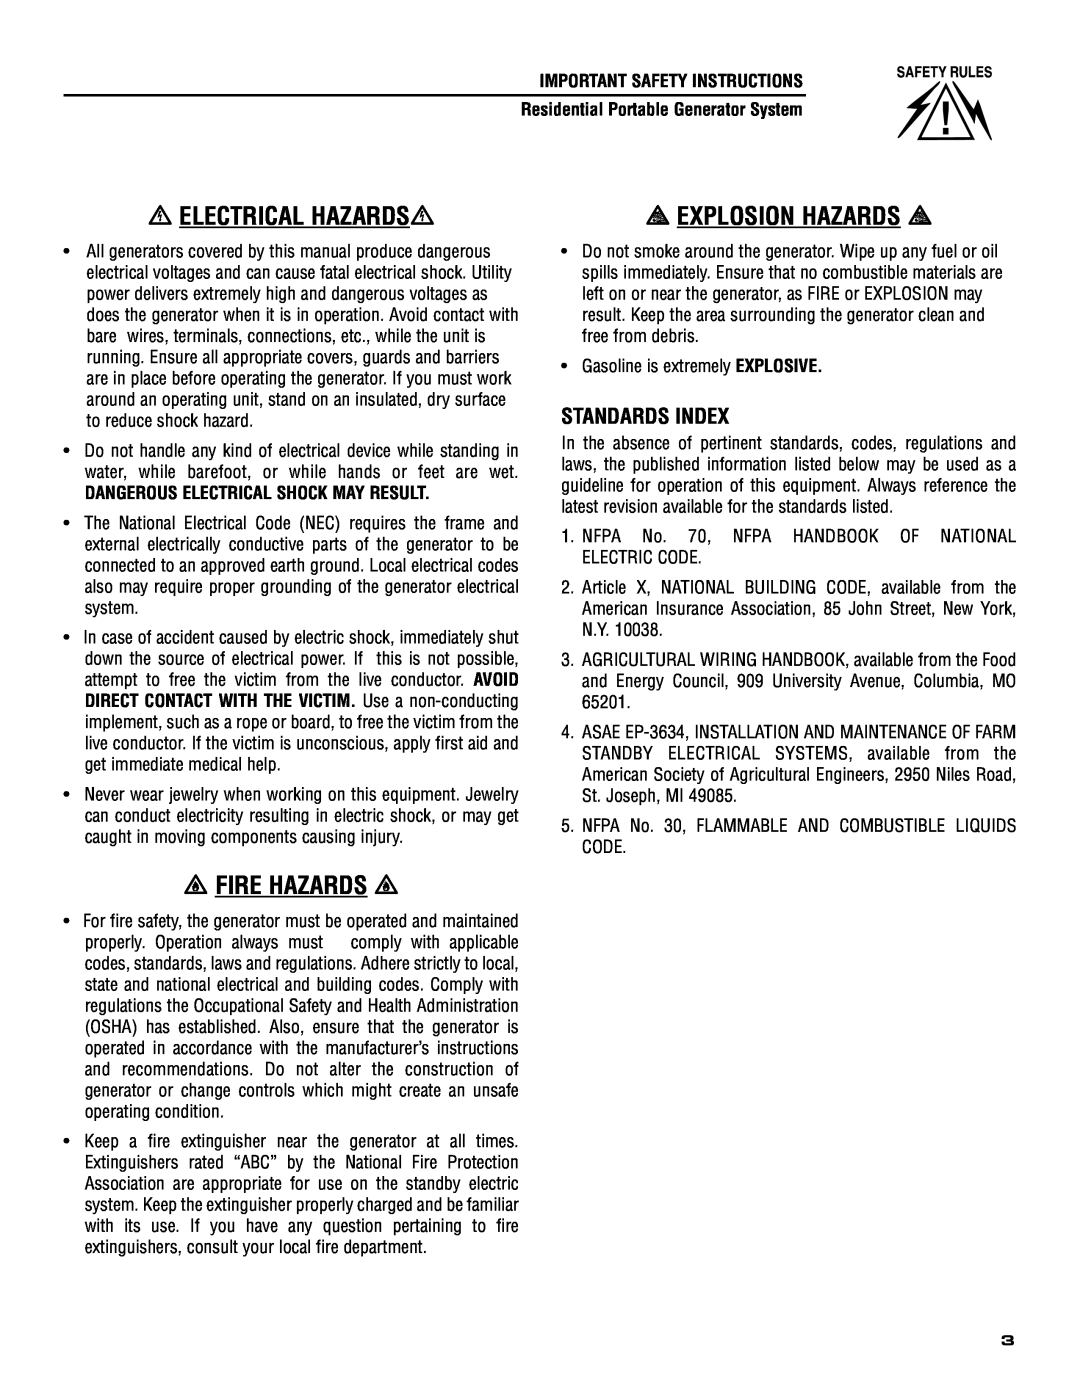 Generac 005308-0 owner manual Electrical Hazards, Explosion Hazards, Fire Hazards, Standards Index 